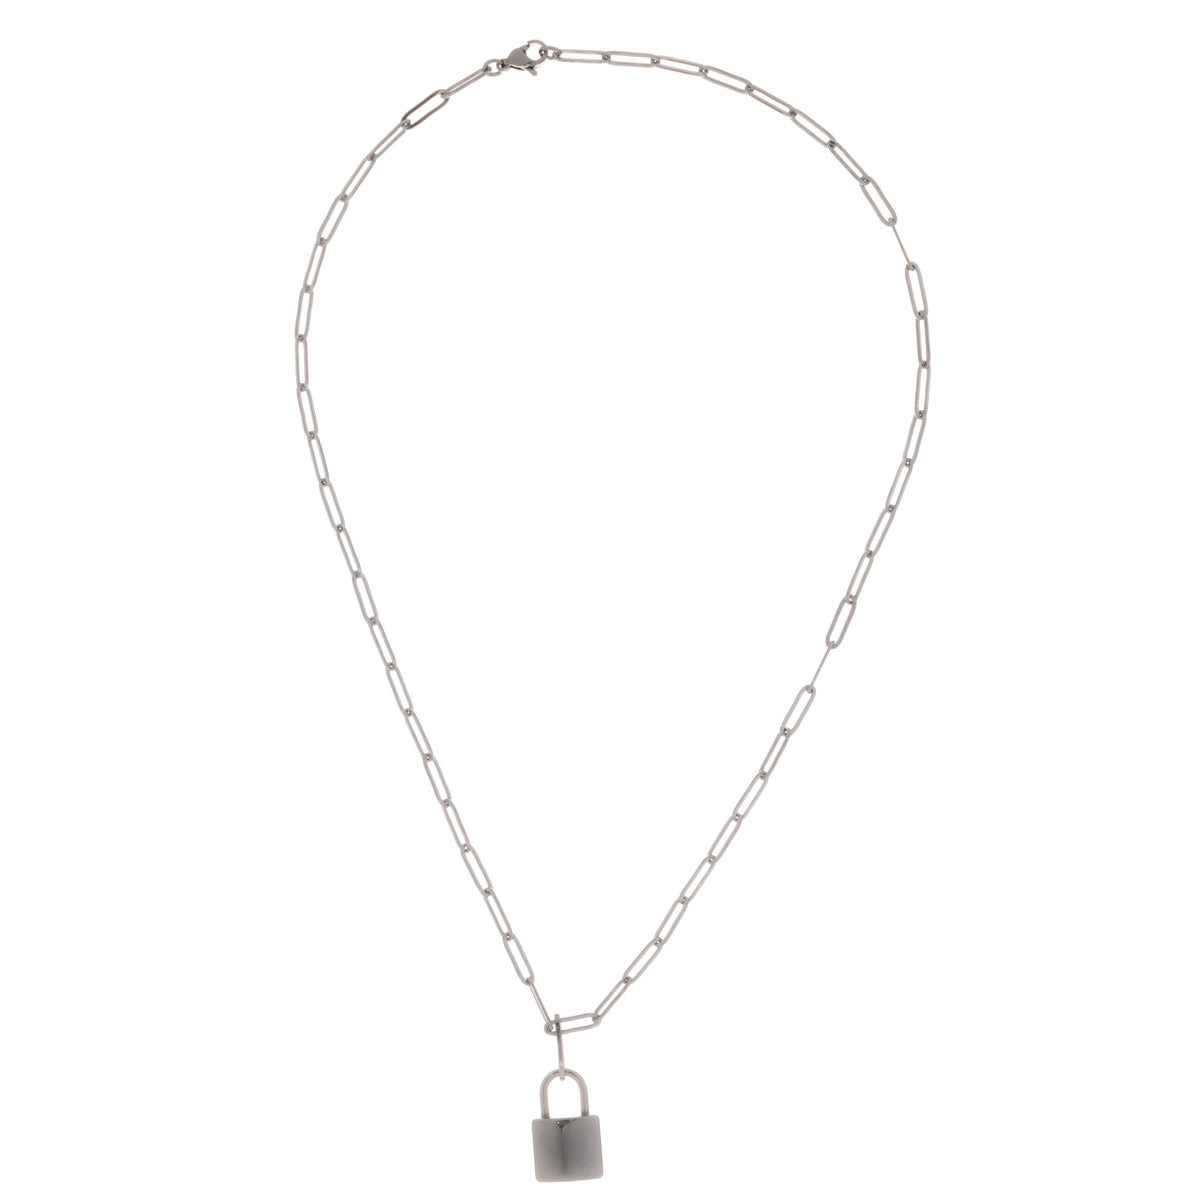 Cable chain necklace lock pendant 42cm (steel 316l)